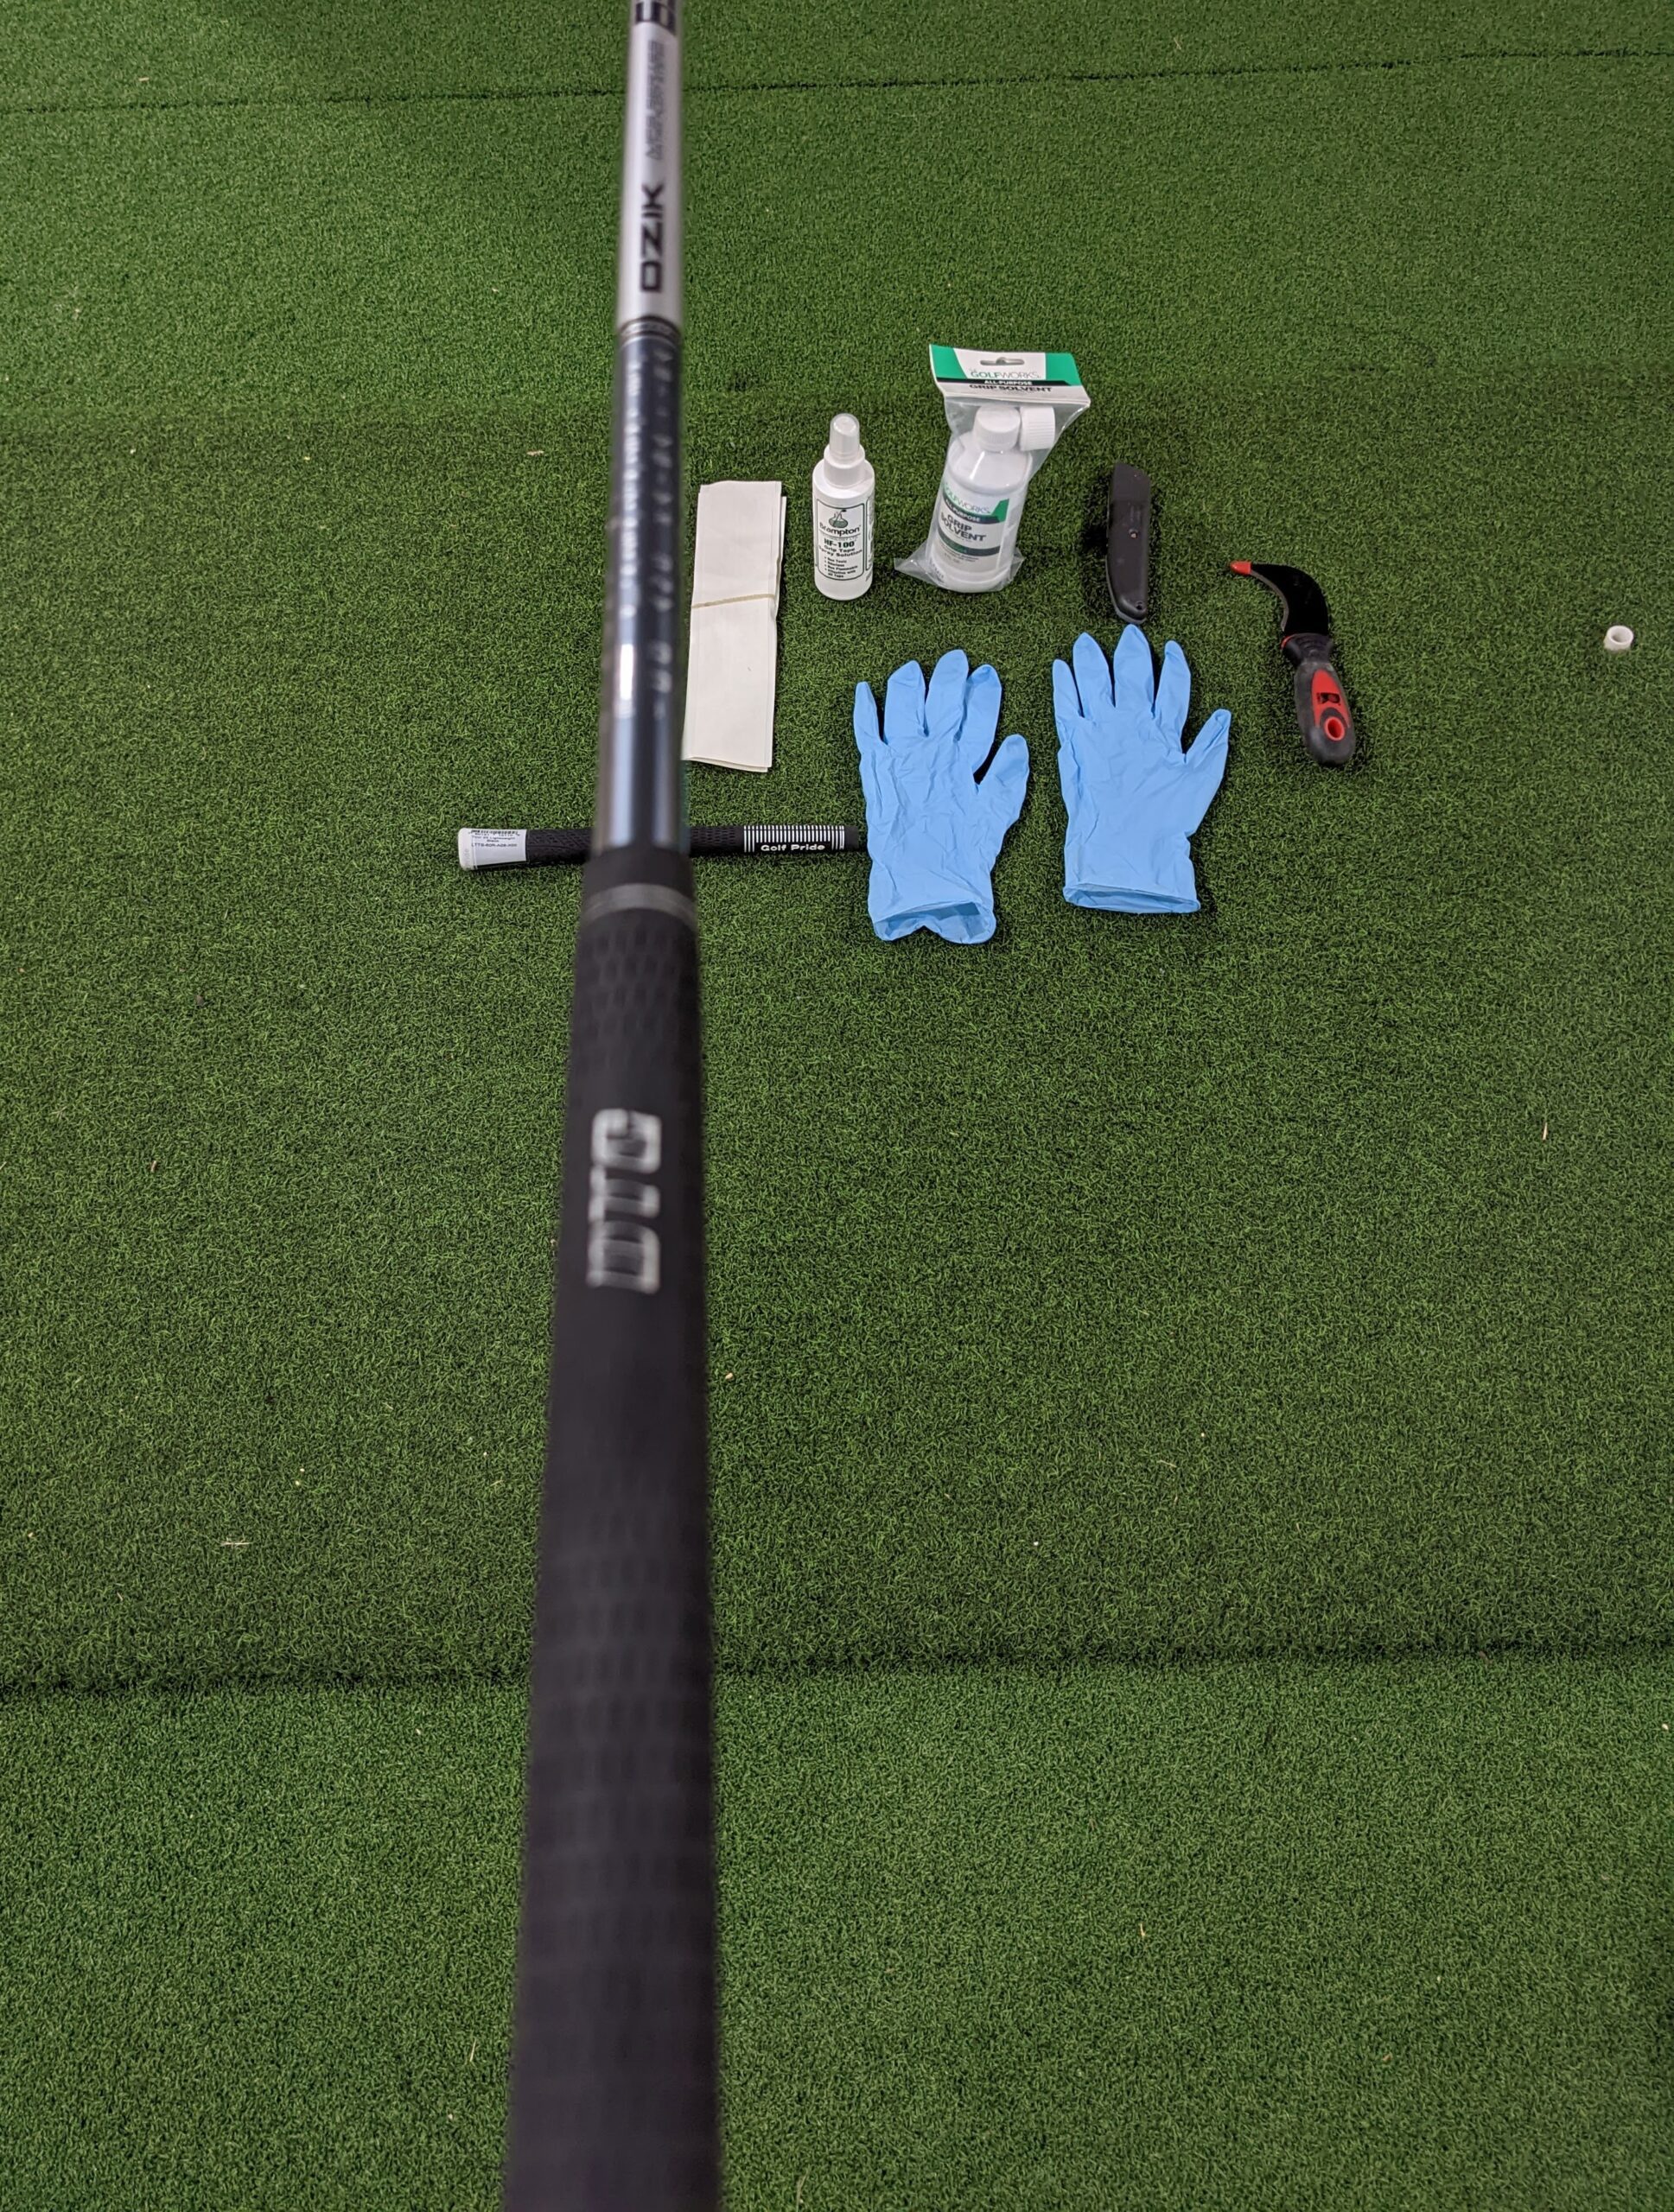 How to Regrip a Golf Shaft